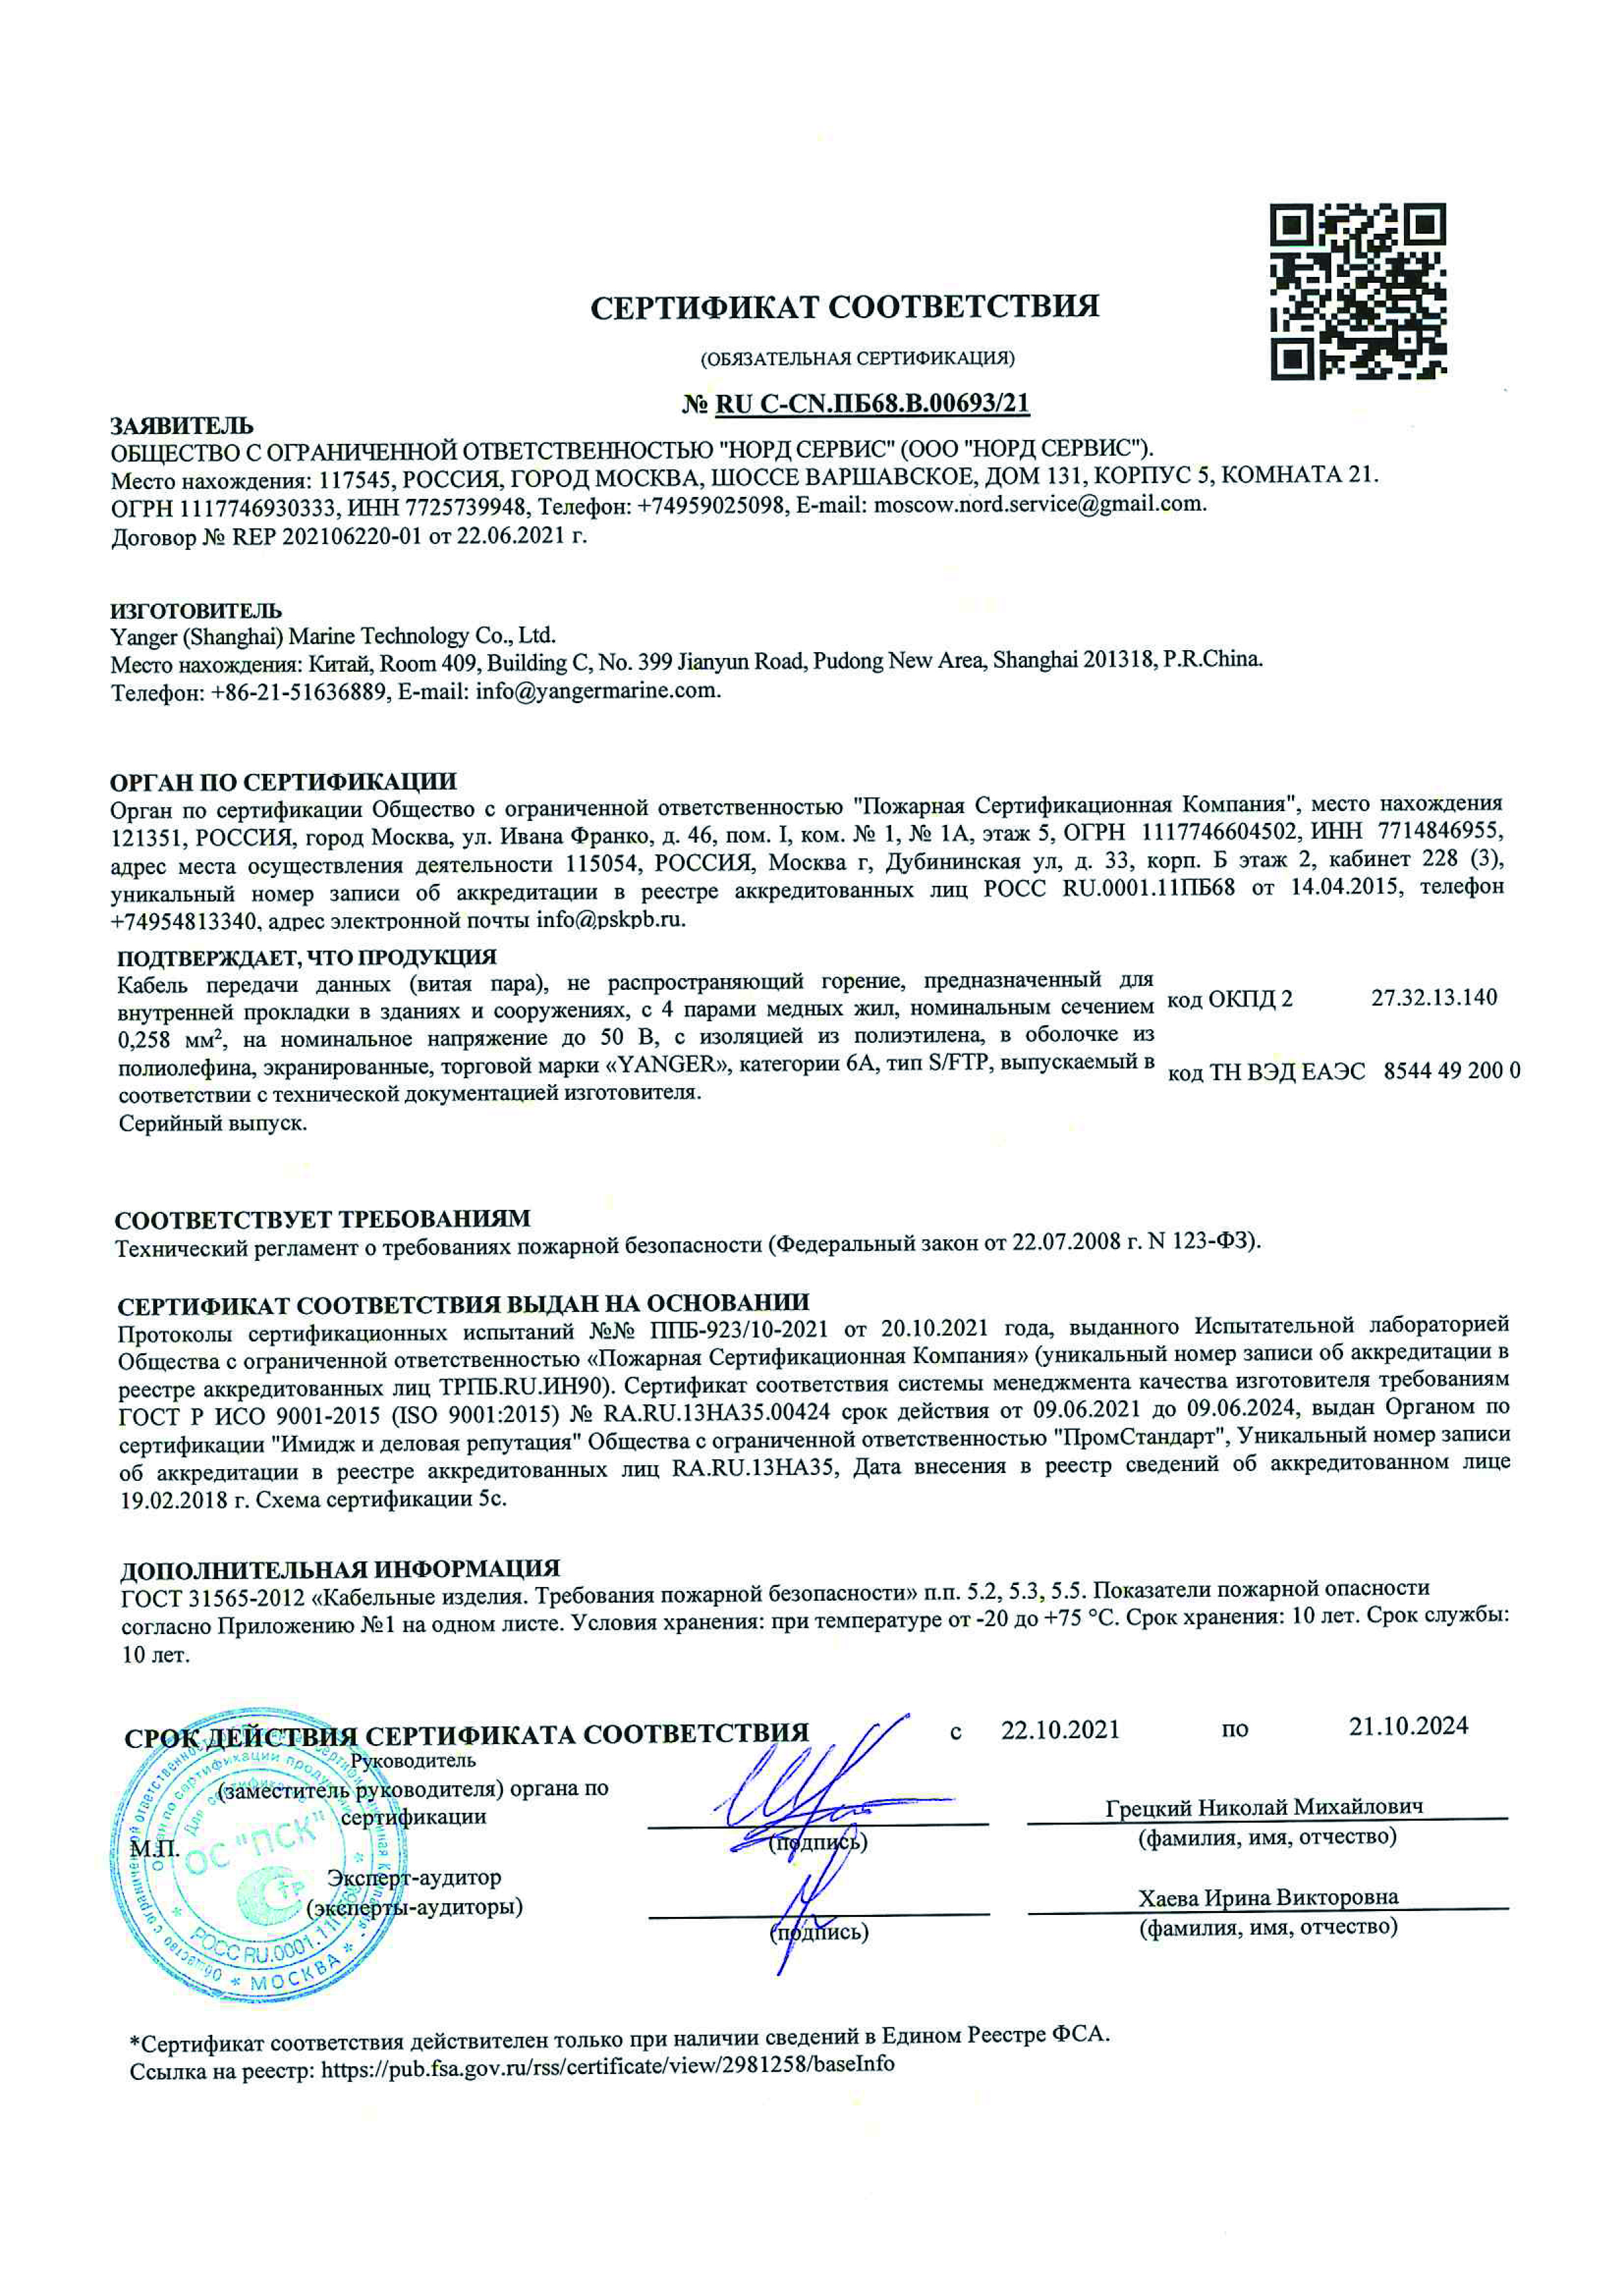 阳尔-网线-FSC COC证书-В.00693-1